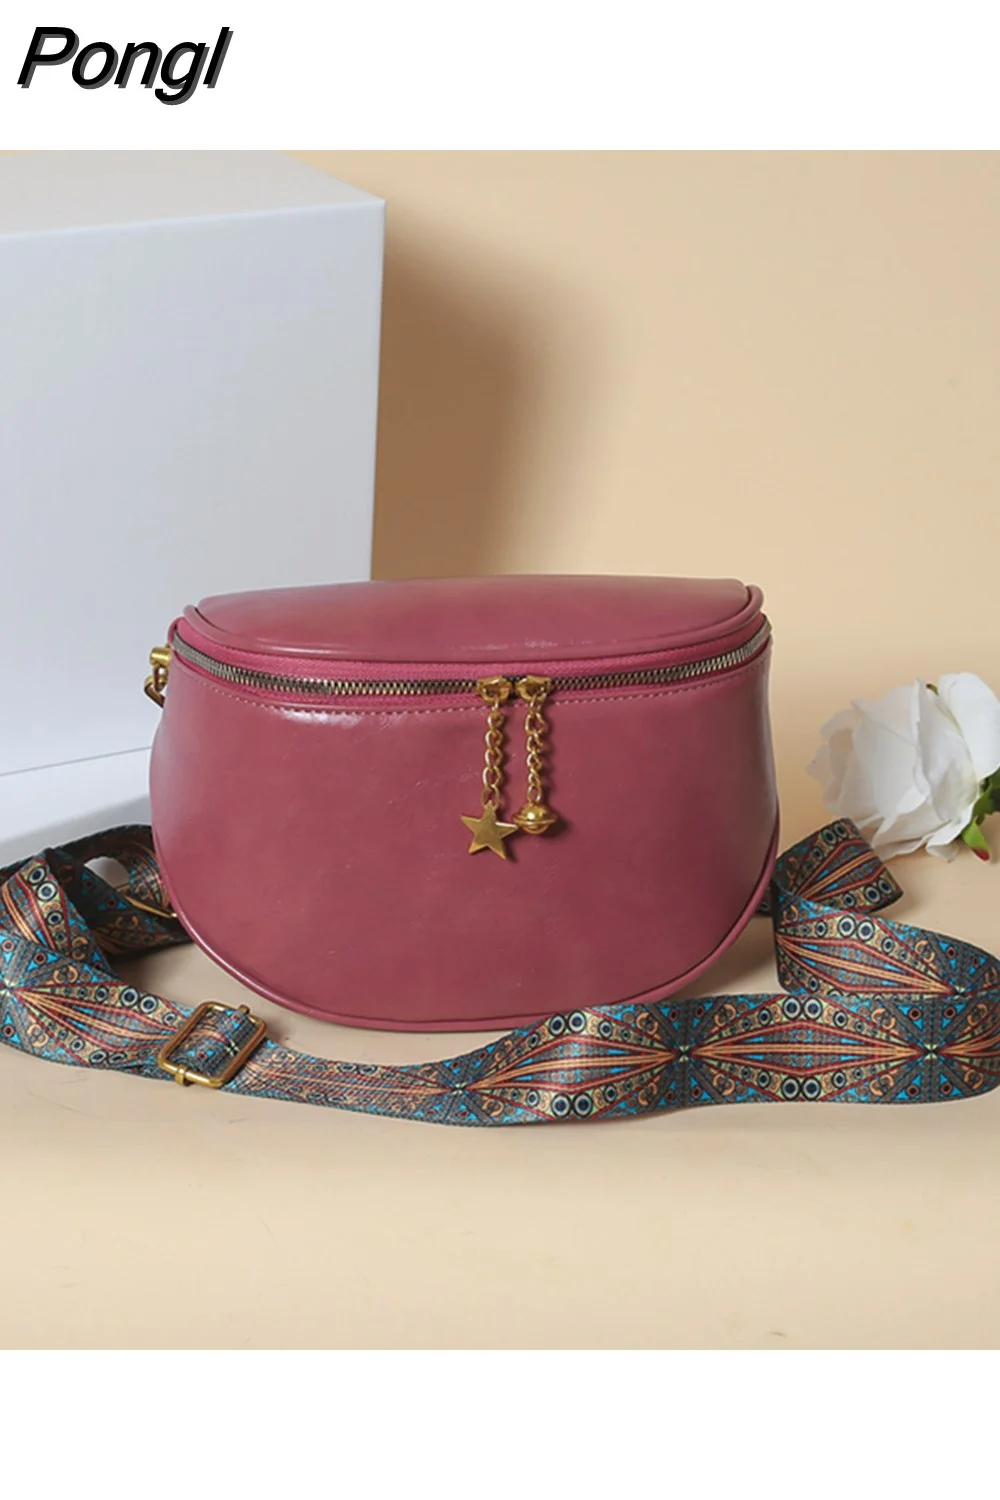 Pongl Women Crossbody Bag Oil Wax PU Leather Chest Belt Packs Ethnic Wide Strap Female Shoulder Bag Half Moon Retro Handbags